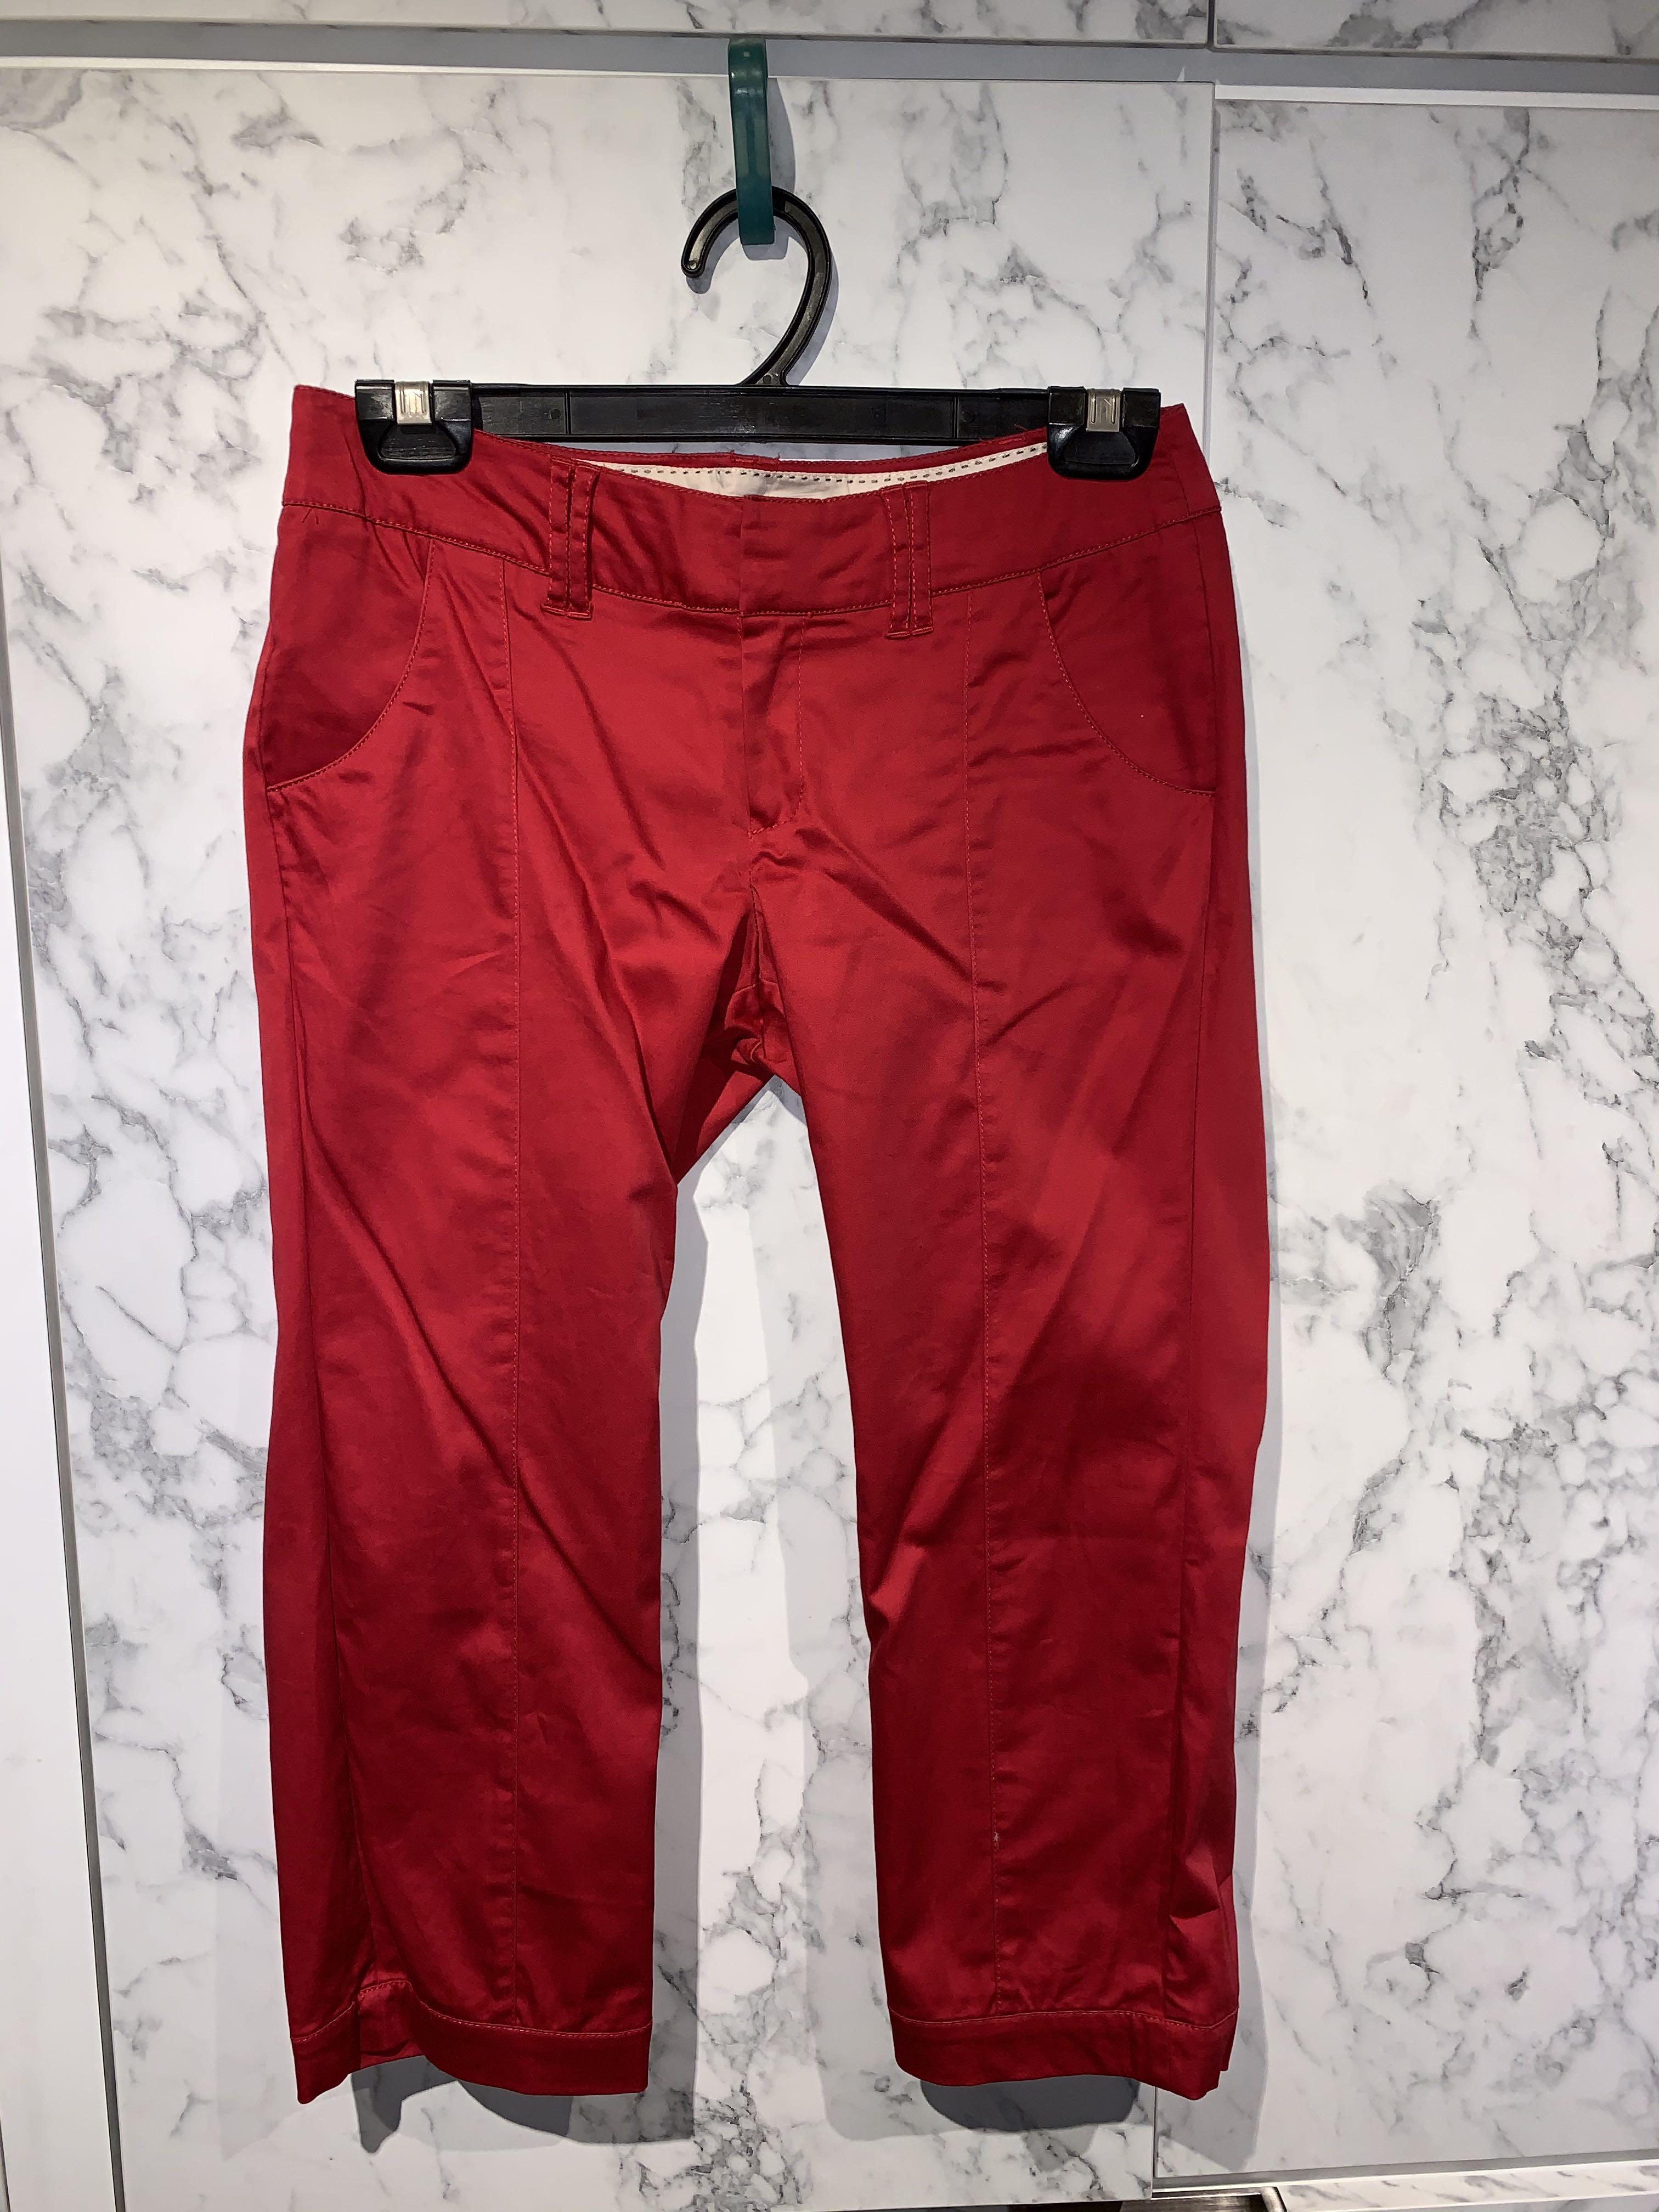 womens red capri jeans